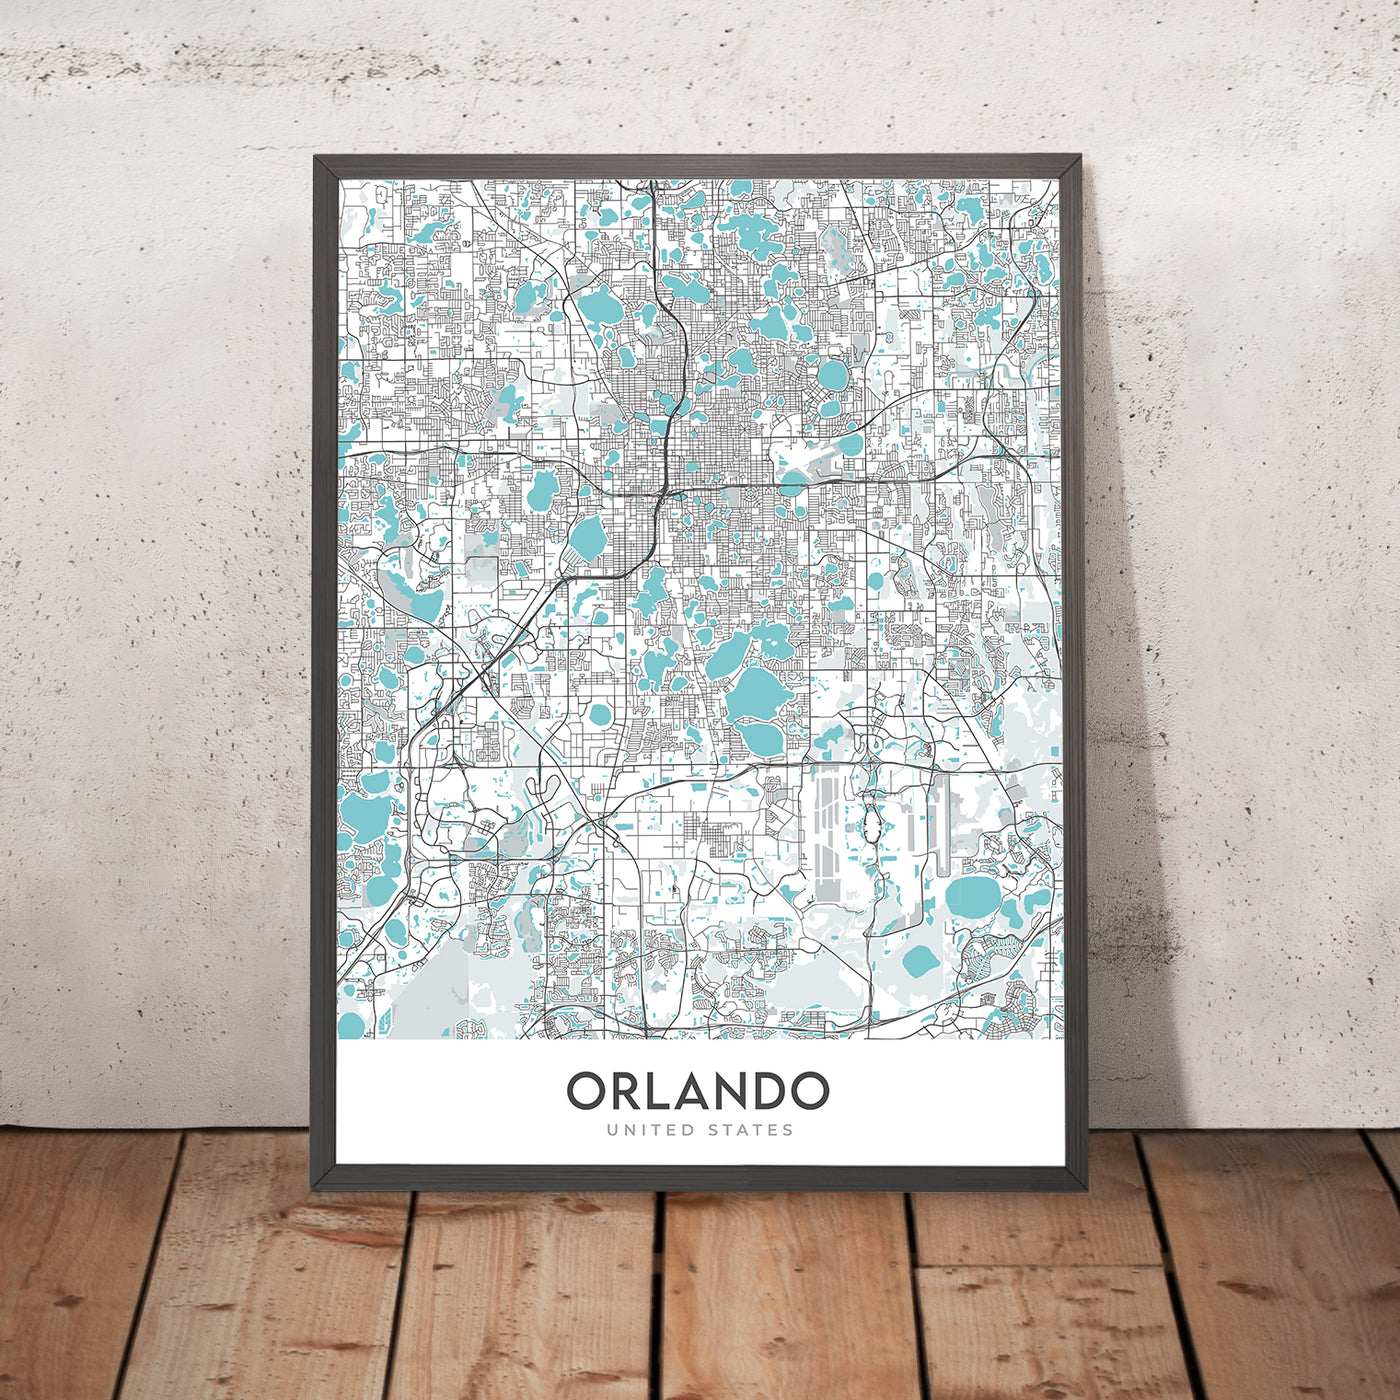 Moderner Stadtplan von Orlando, FL: College Park, Lake Eola Park, Leu Gardens, I-4, SR 408